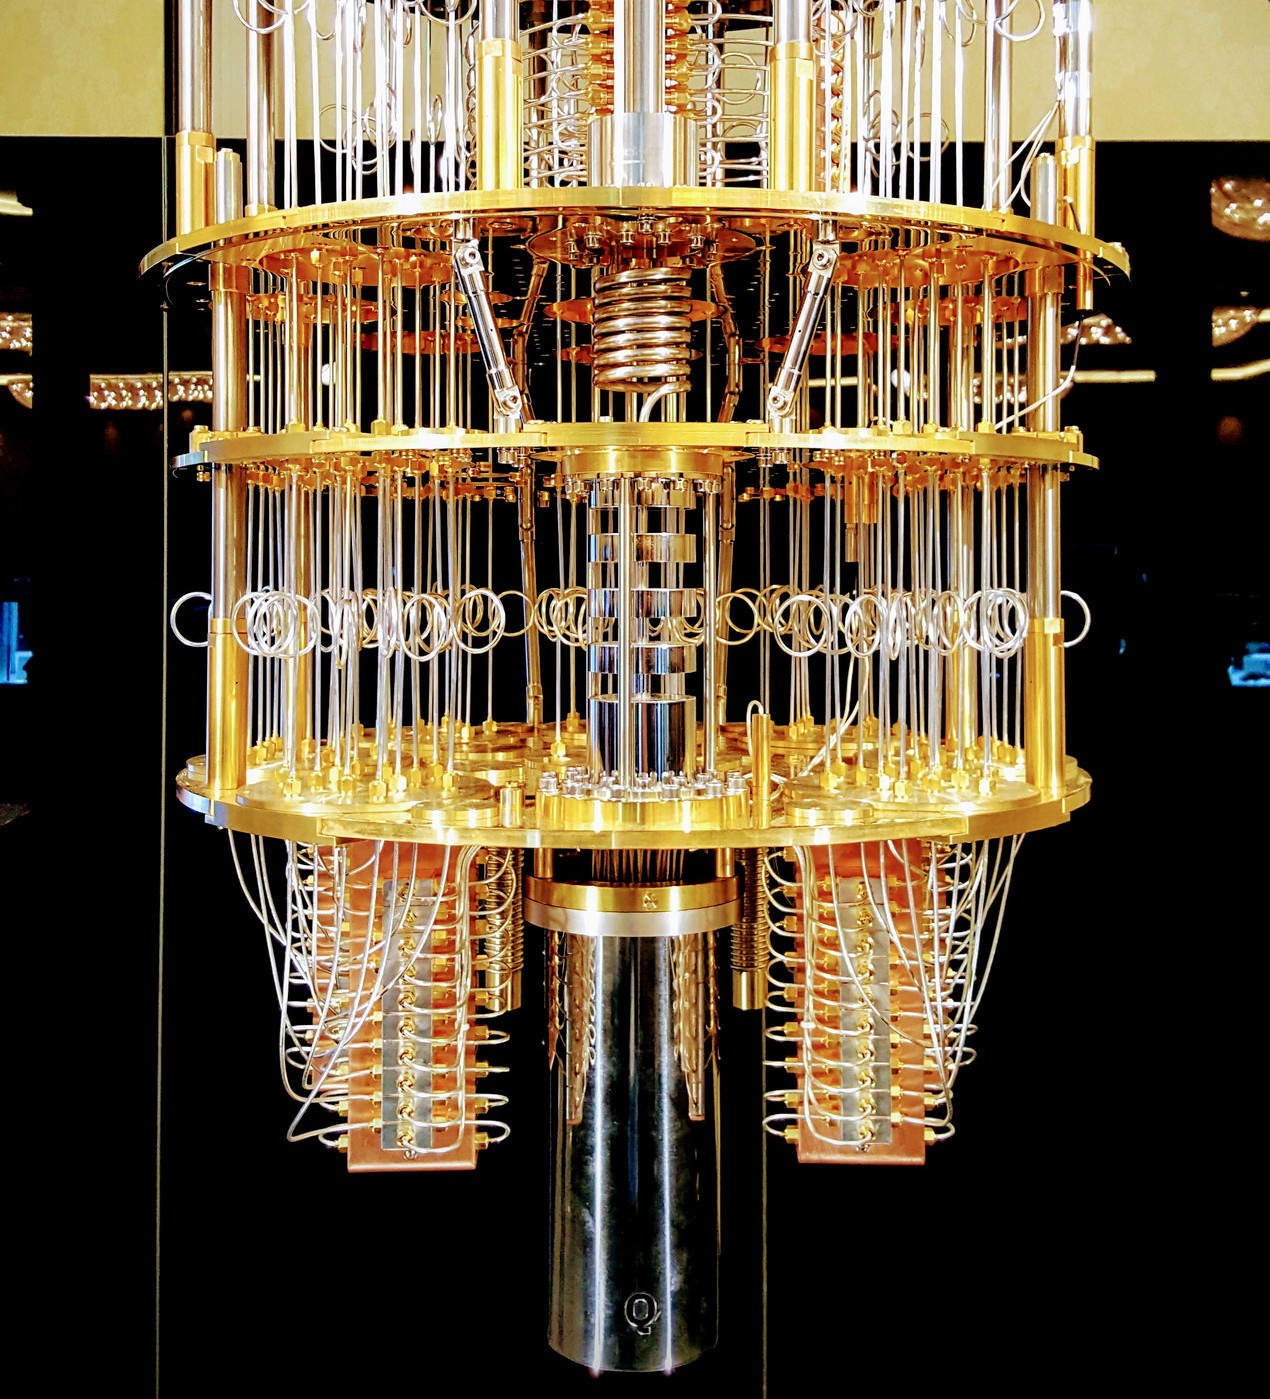 Computador quântico (Foto: Lars Plougmann)